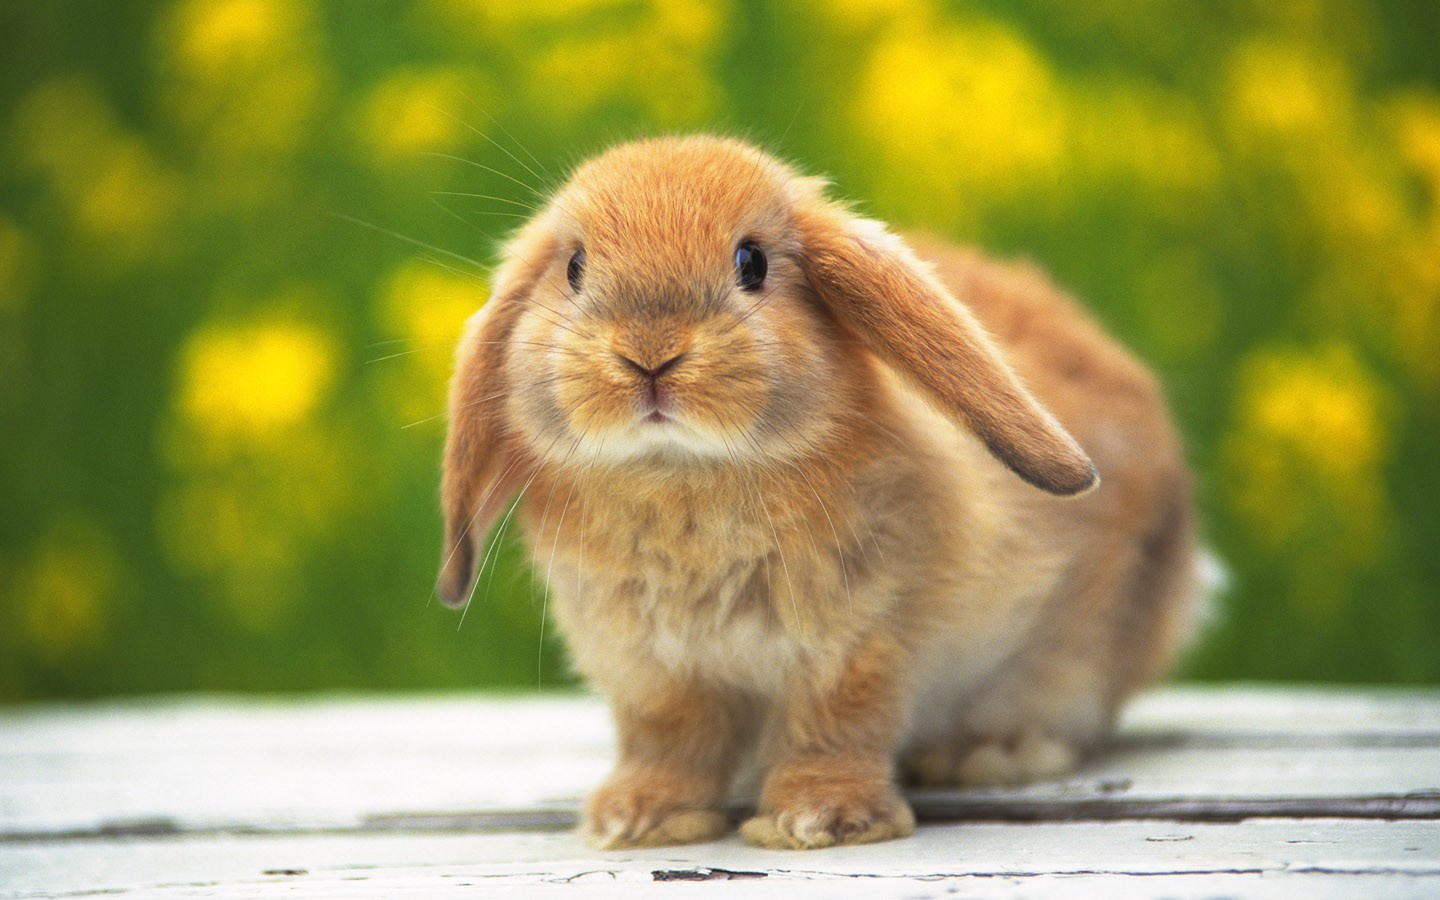 Cute Baby Bunnies HD Wallpaper In Animals Imageci